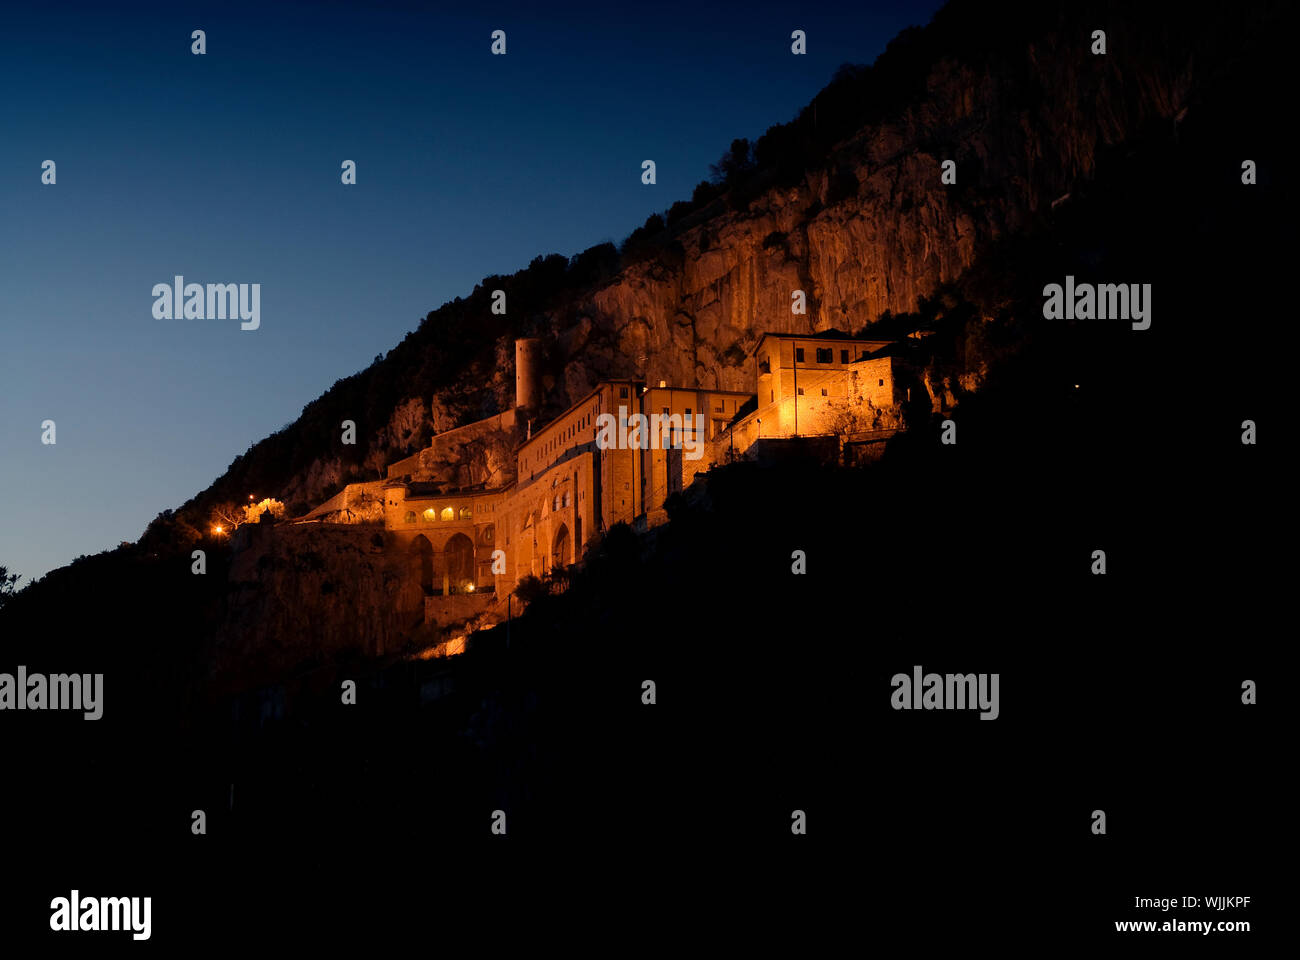 Der heilige Benedikt Kloster/Sacro Speco Heiligtum - Subiaco - Italien - Externe Sonnenuntergang Landschaftsfotos Stockfoto